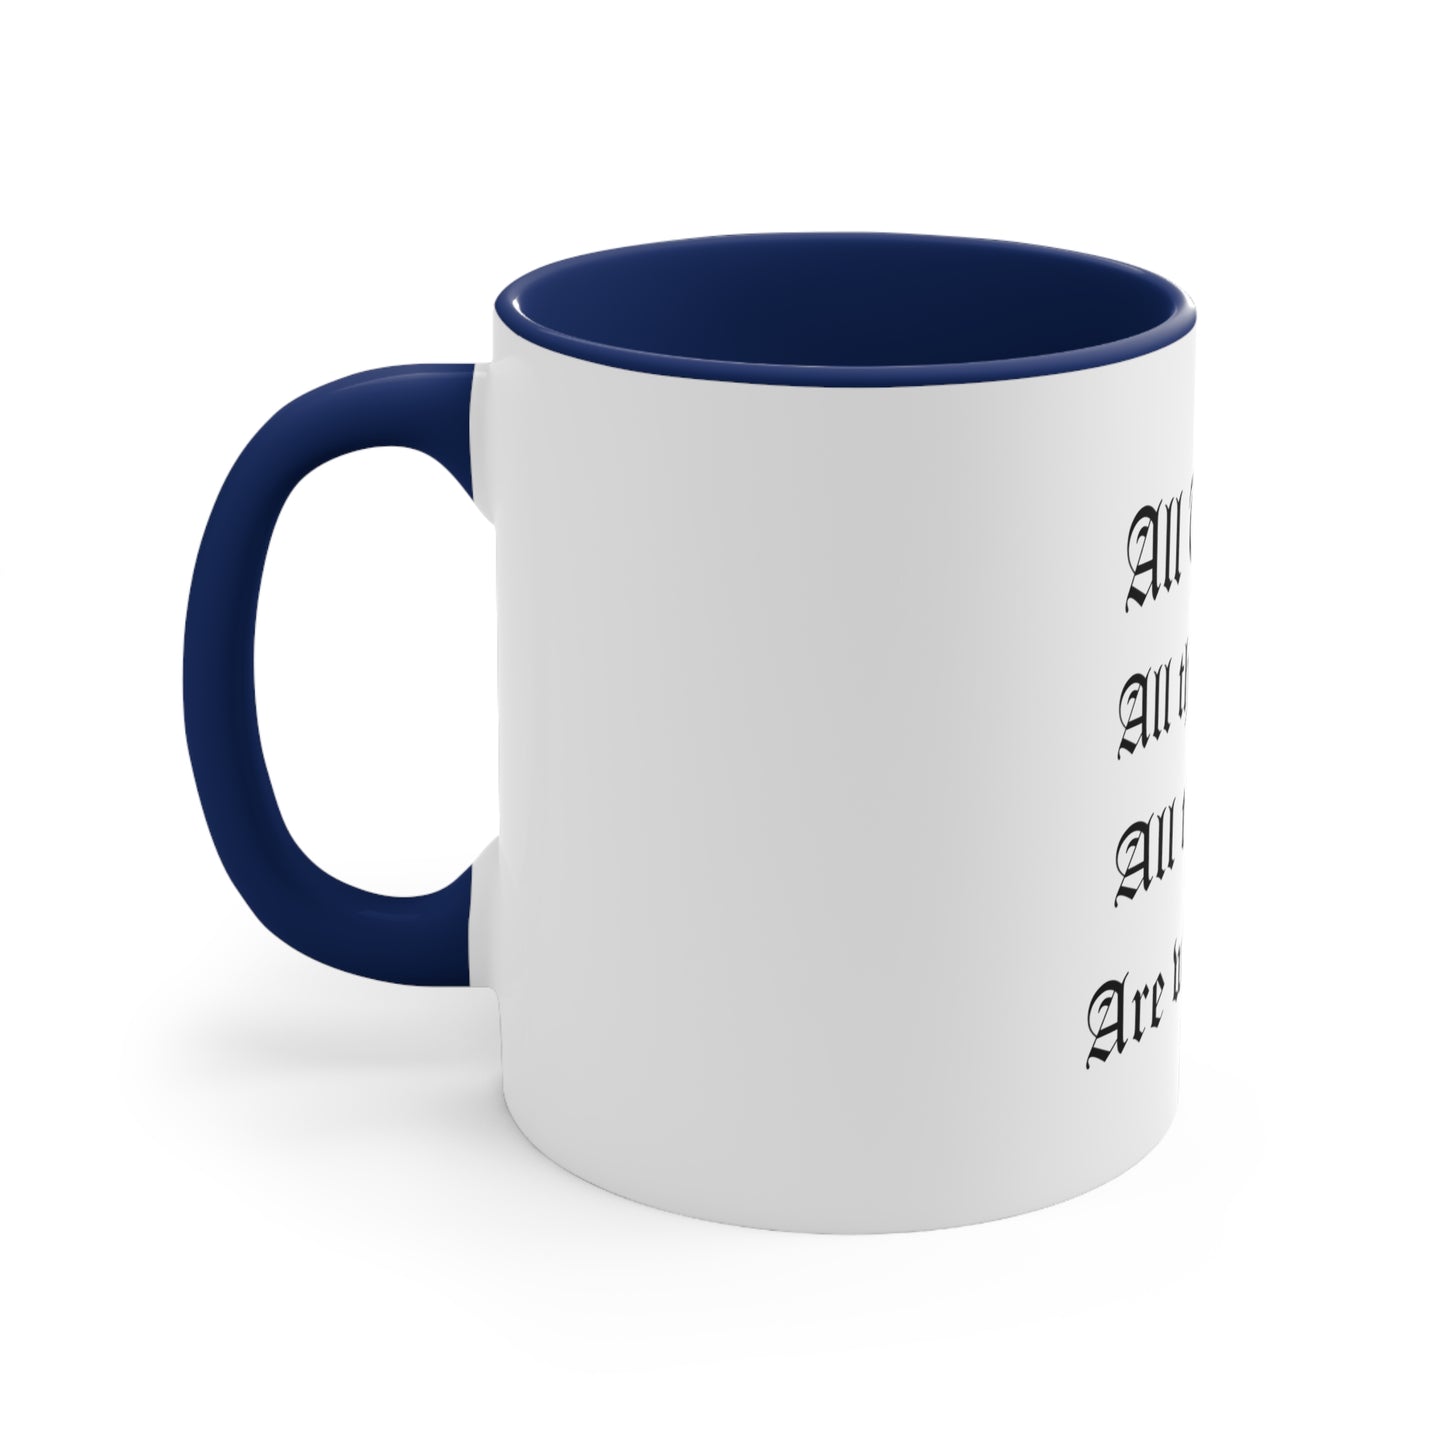 All the Gods Accent Coffee Mug, 11oz